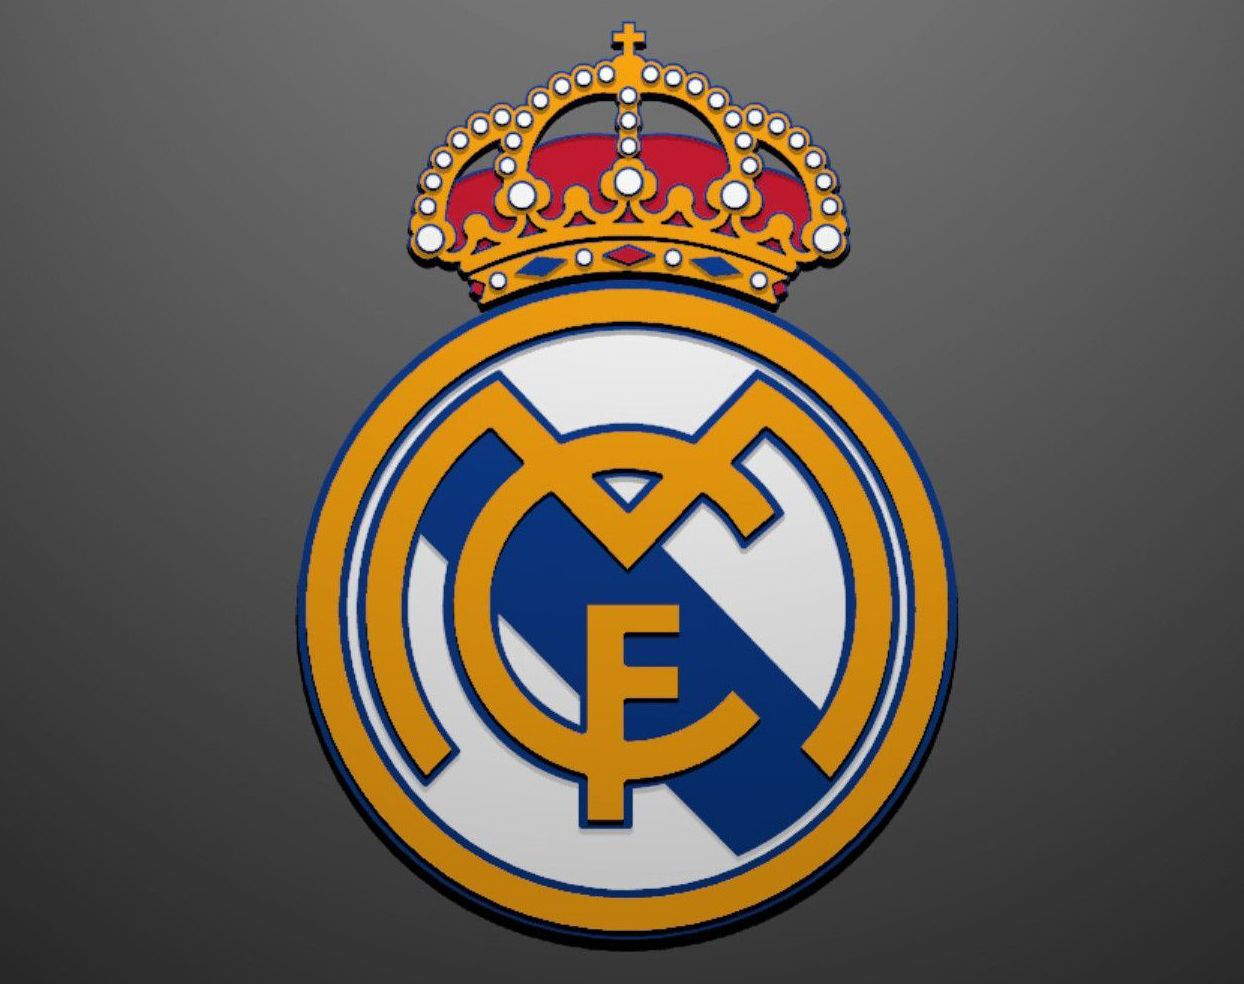 Real Madrid CF: Statistics, Top Players, Market Value, Ranking